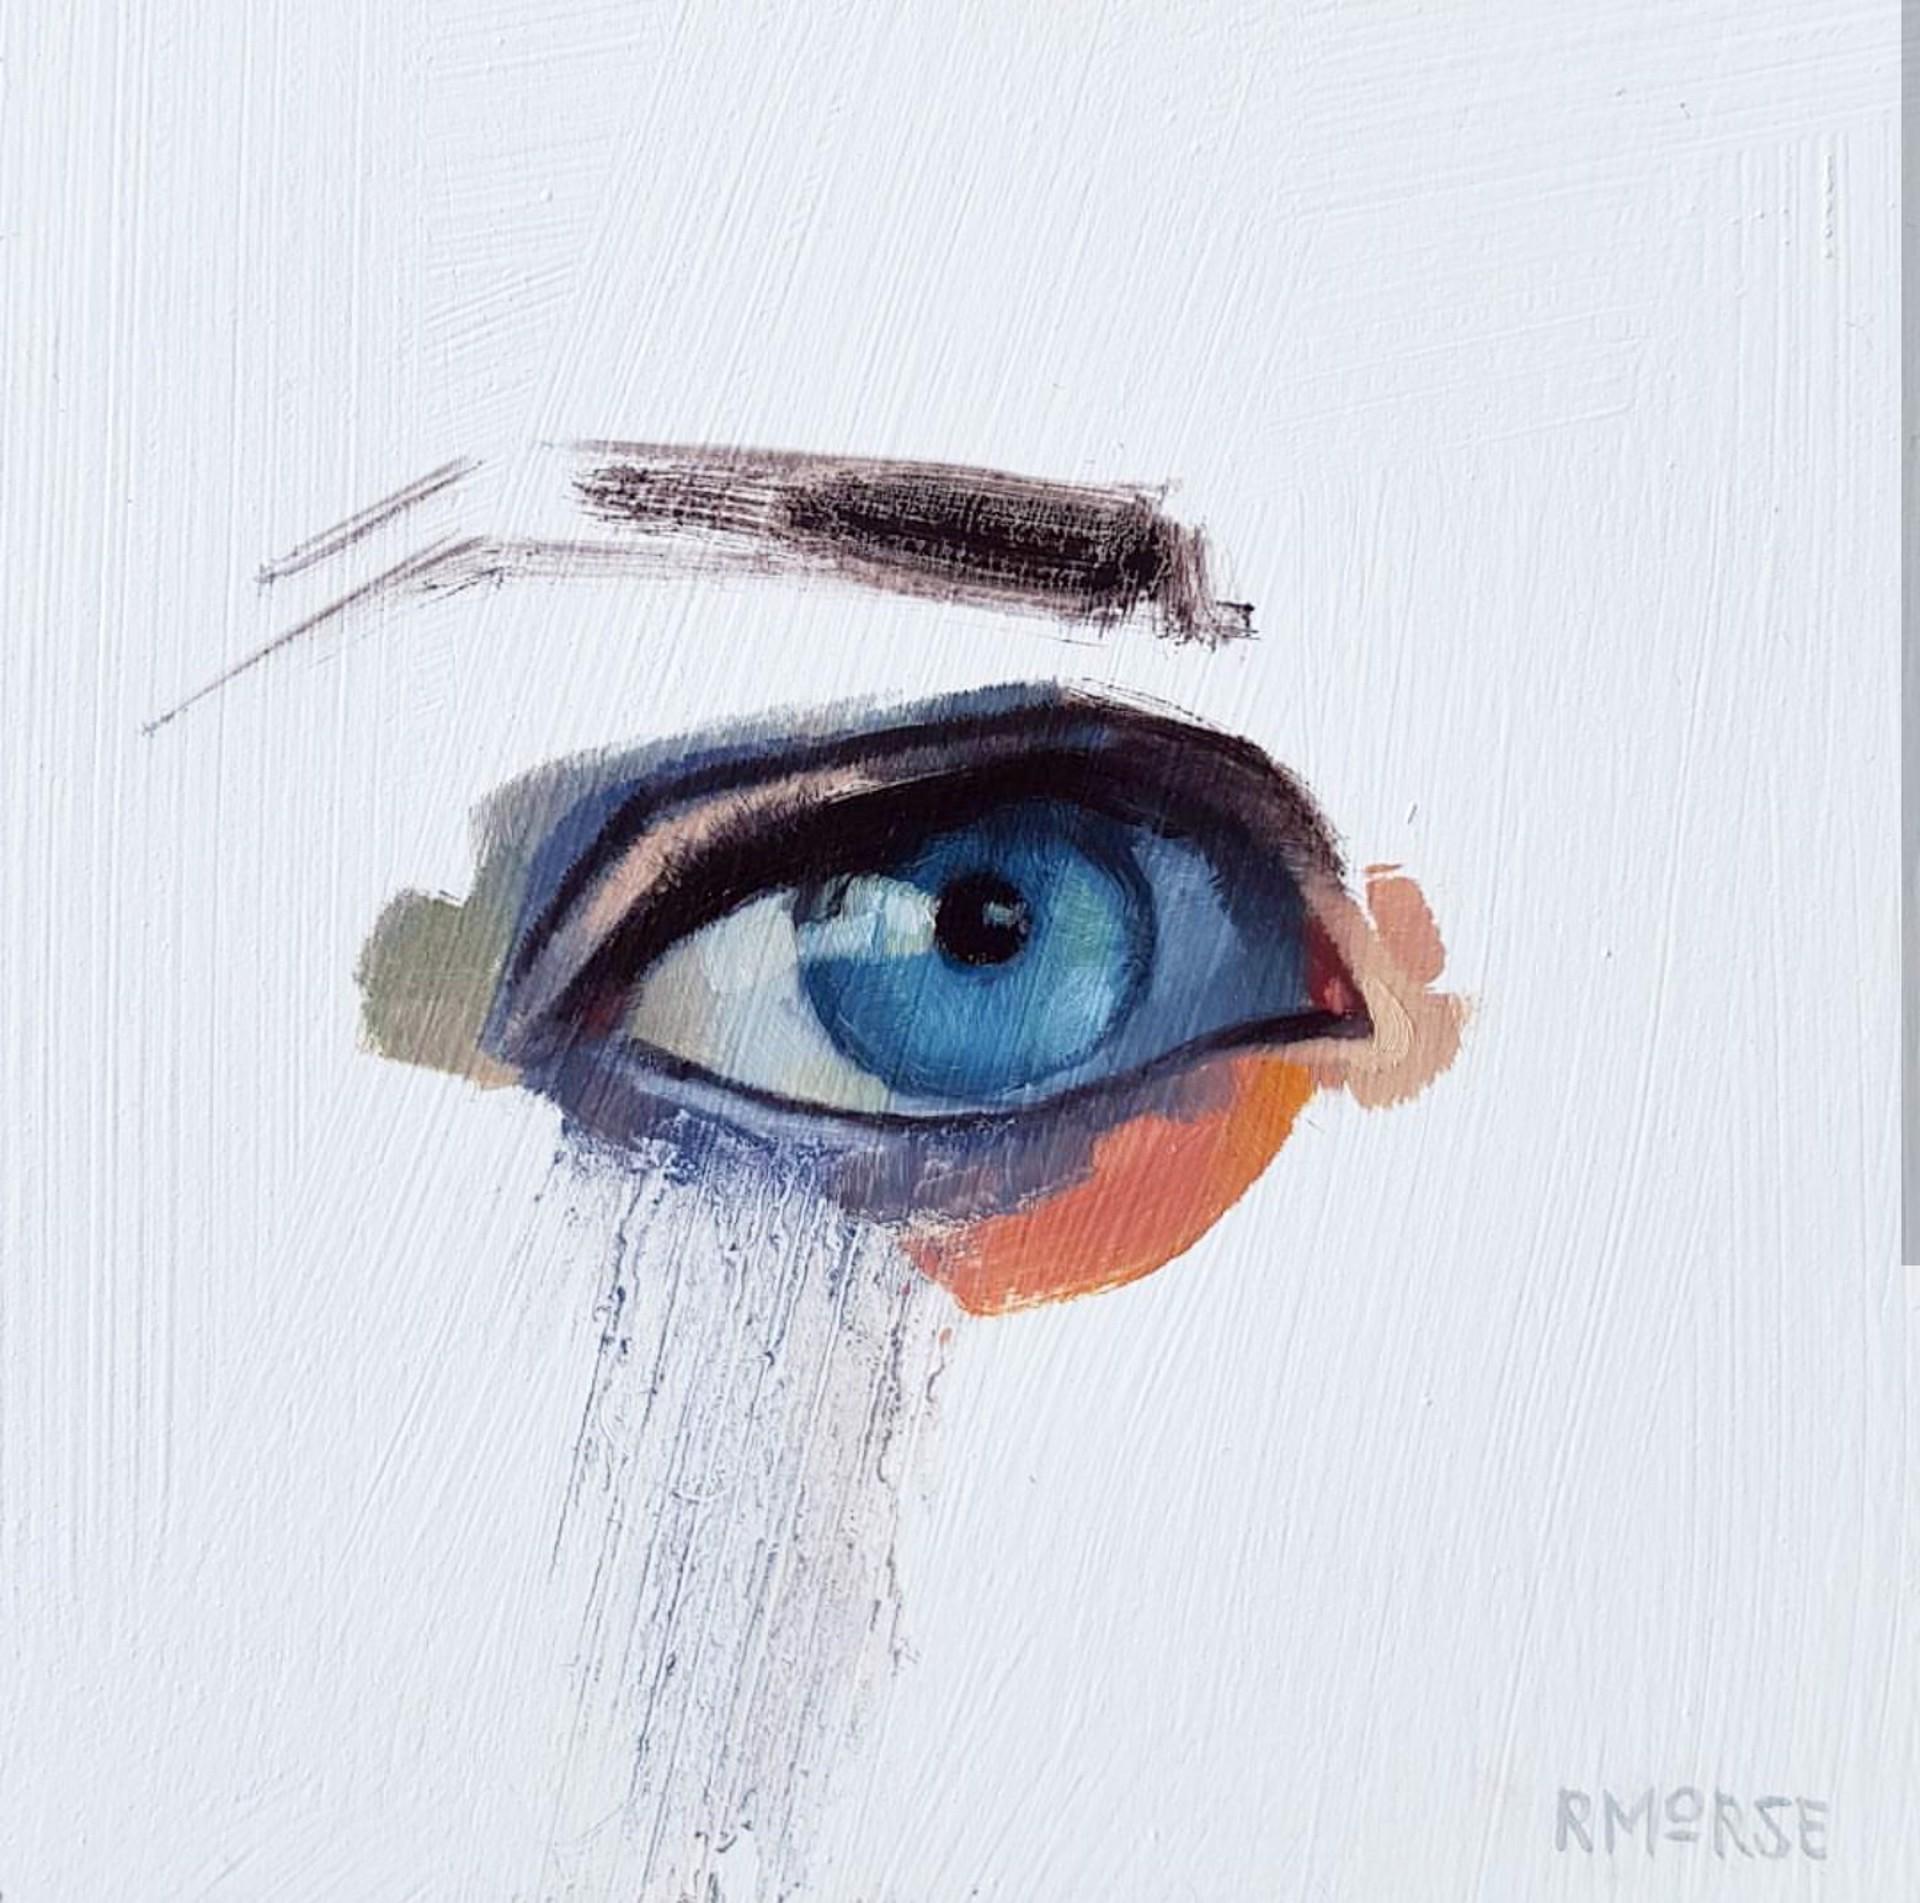 Simple Eye - Art by Ryan Morse